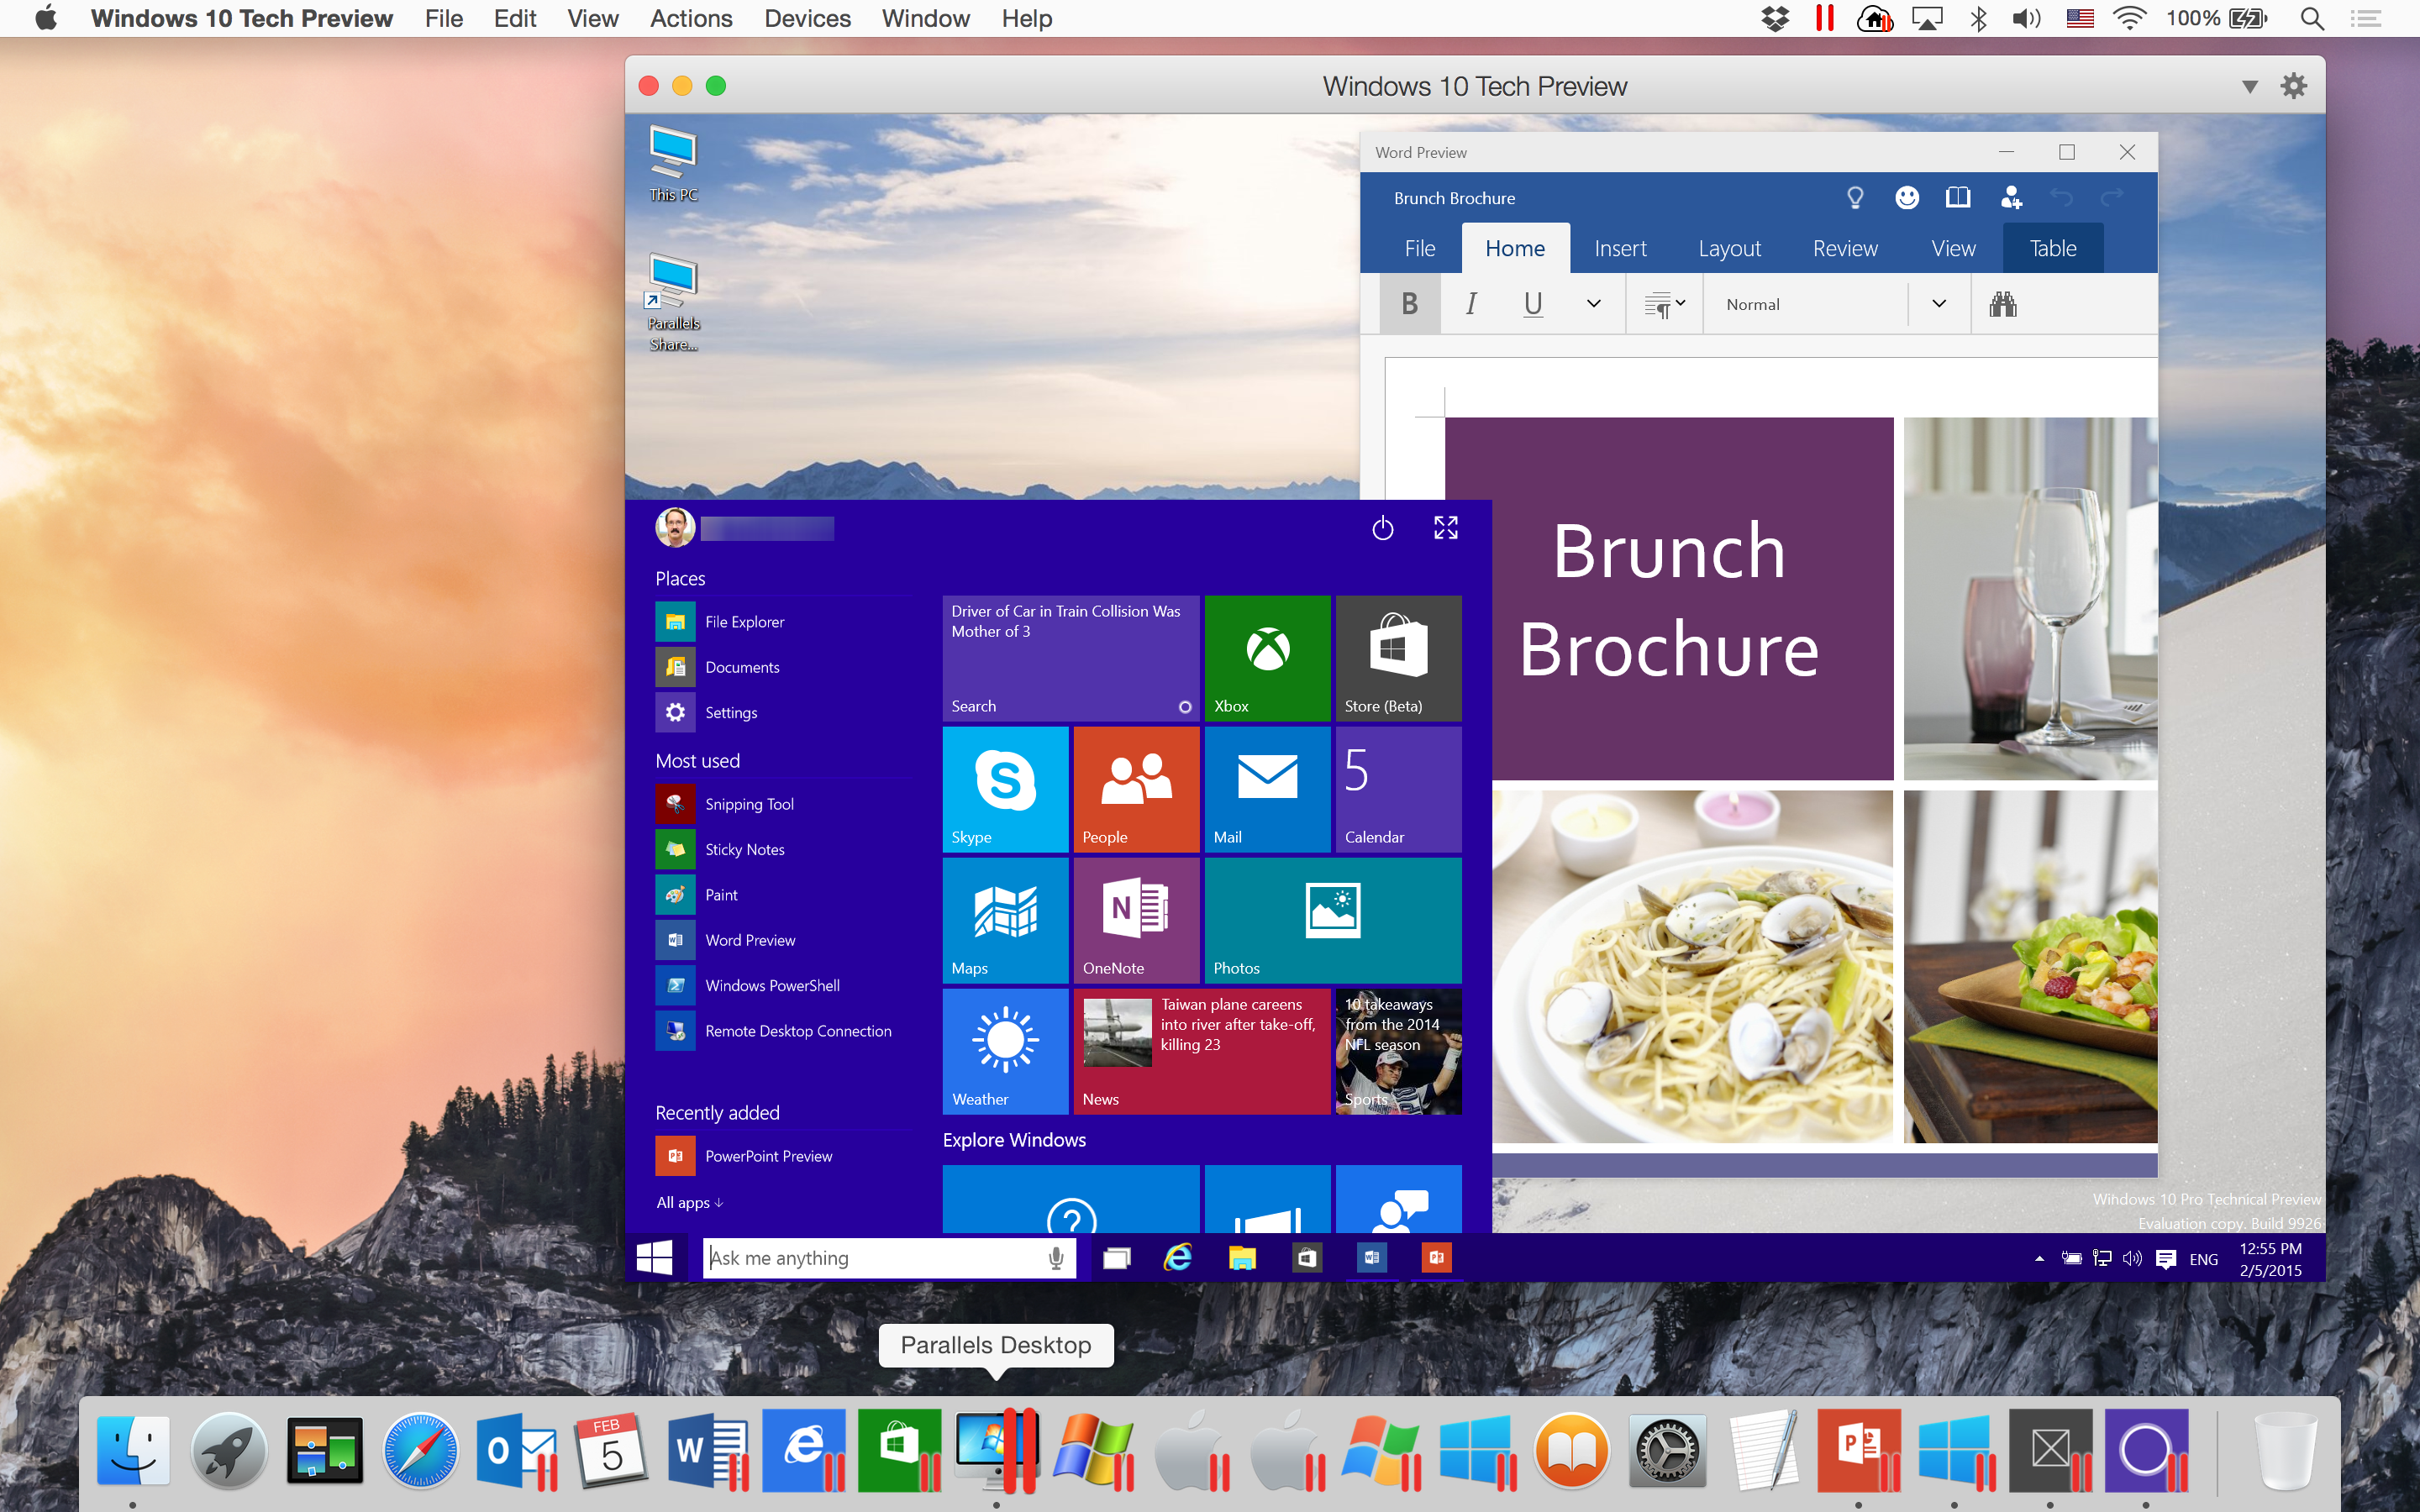 Windows 10 Tech Preview in Parallels Desktop 10 on Mac OS X Yosemite